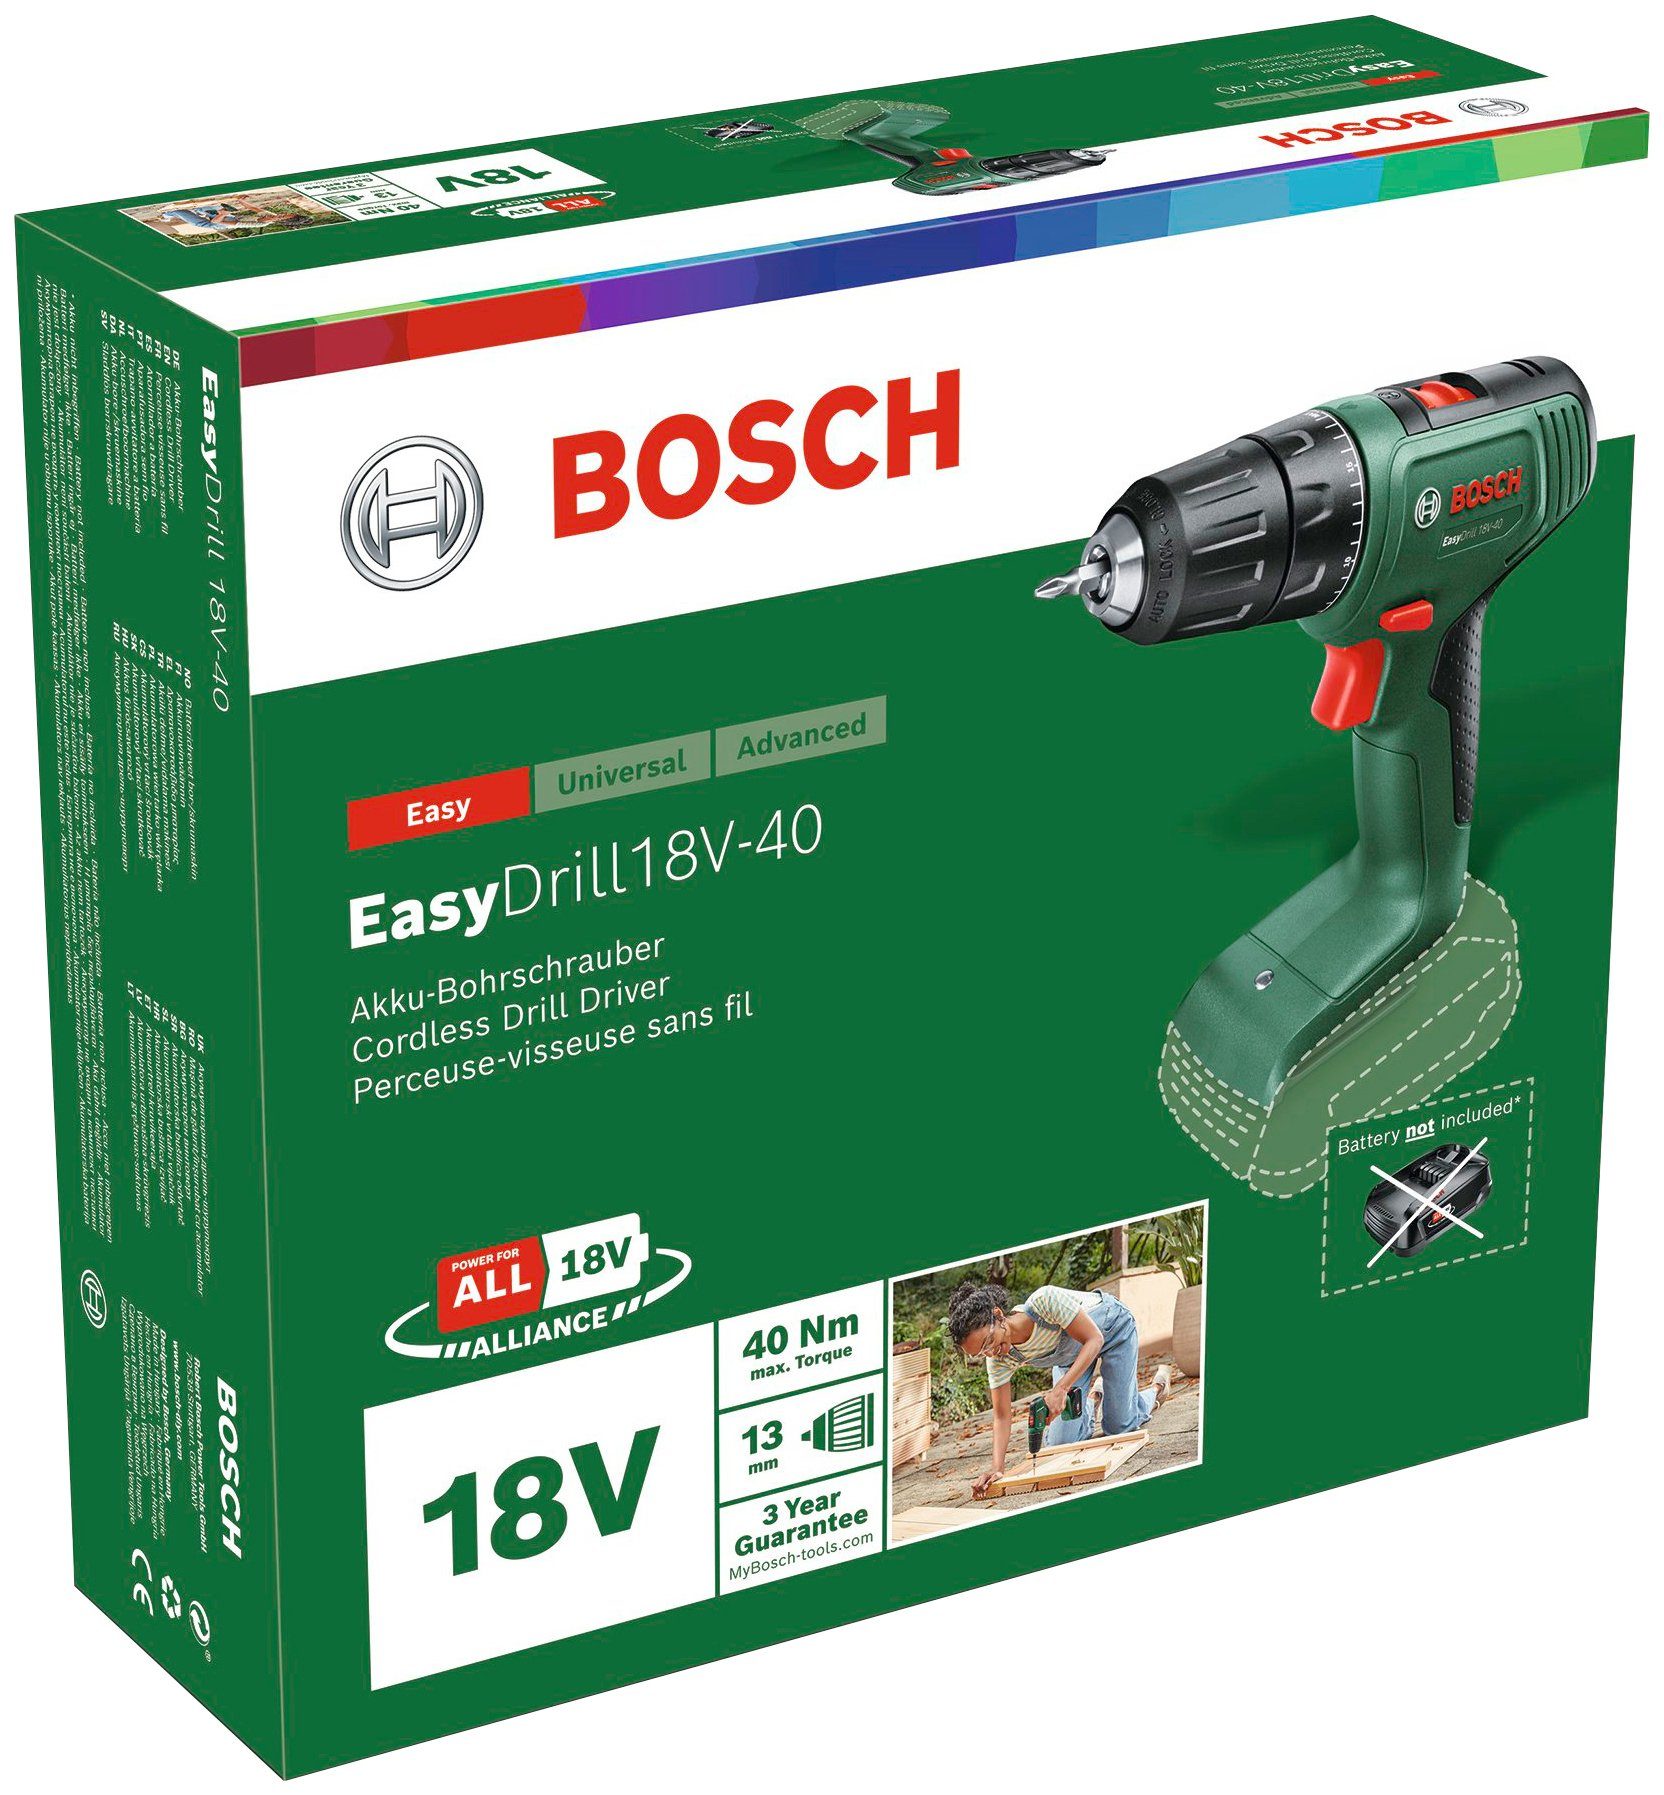 Bosch Akku-Bohrschrauber 18V-40, & und Garden System 18 Volt ohne Ladegerät, Home Akku Easydrill